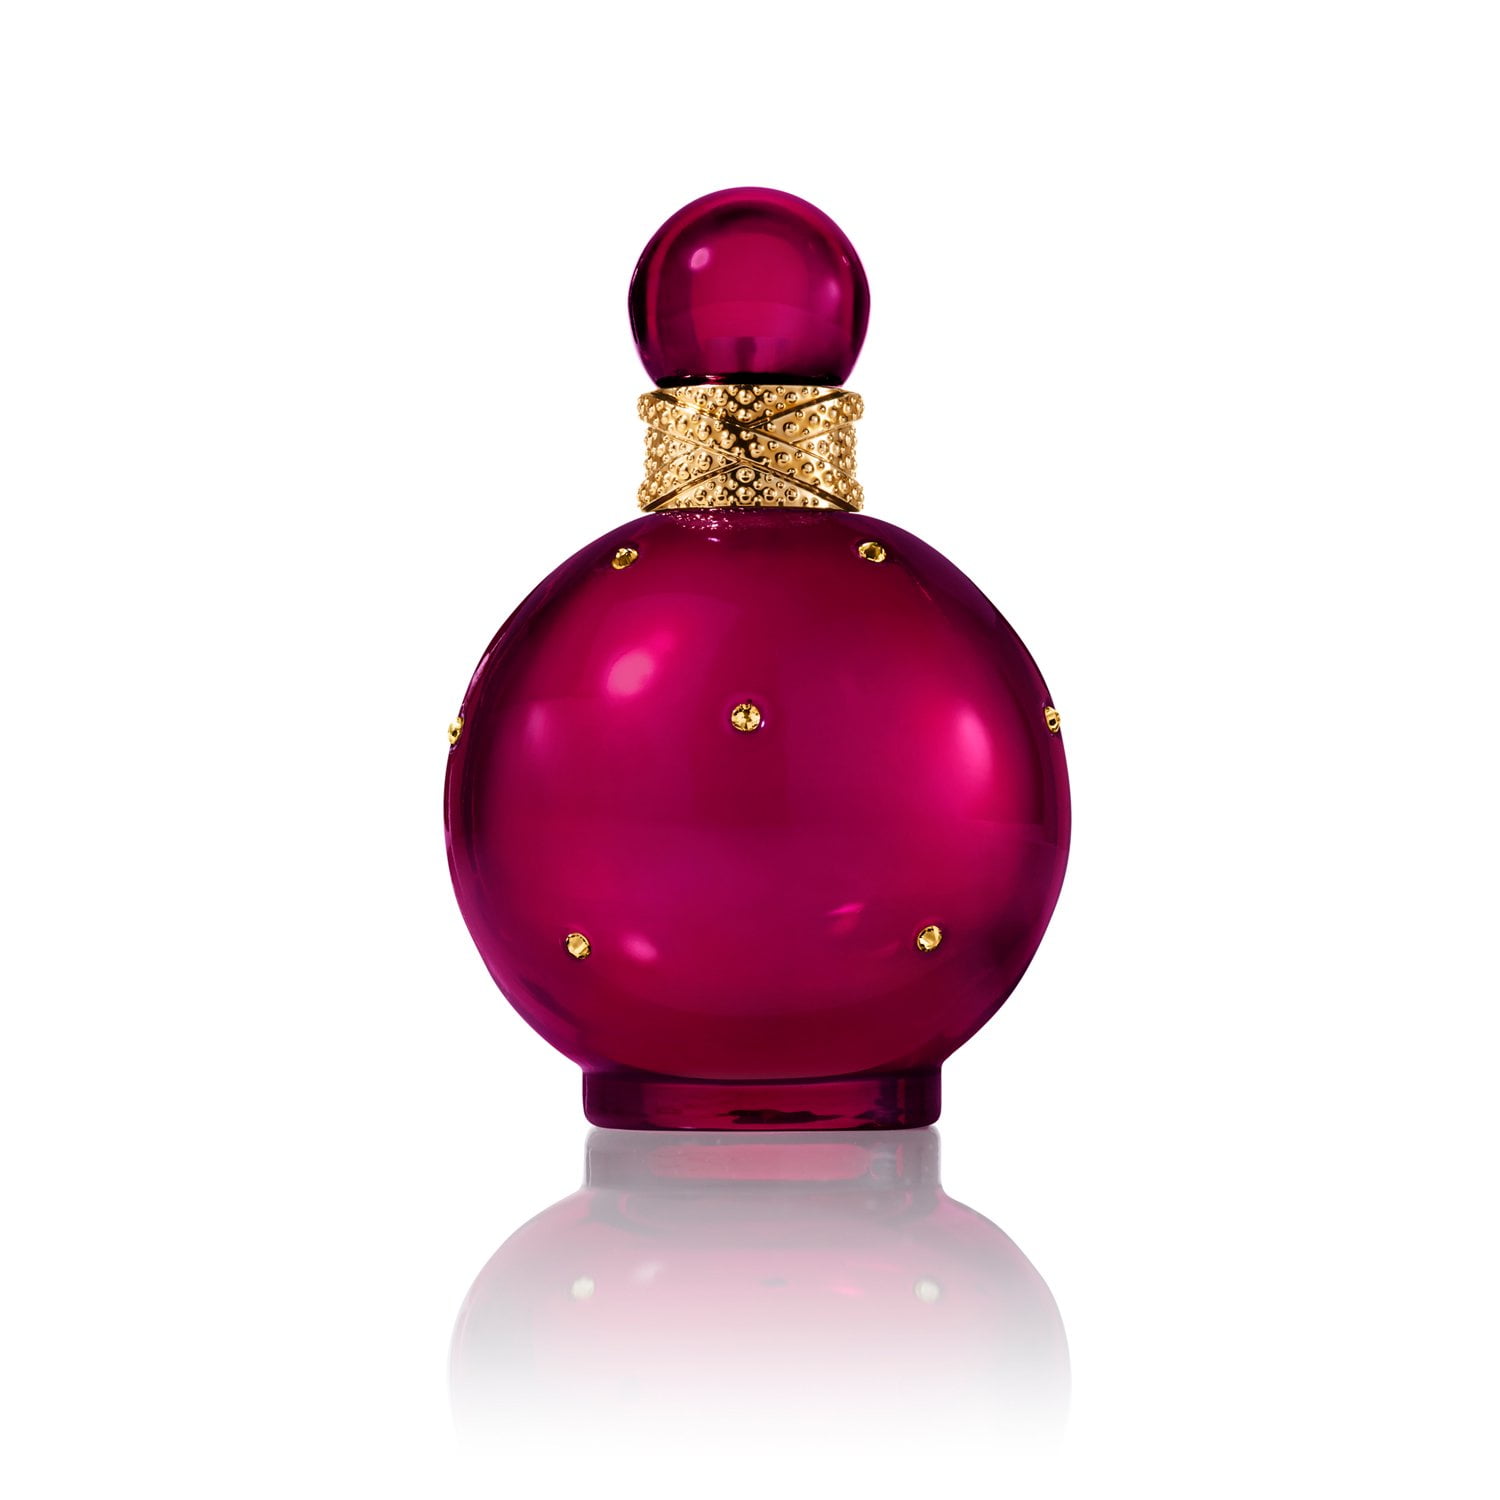 Perfume Britney Spears Fantasy Feminino Eau de Parfum 100ml - Beauty Pharma  Cosméticos Ltda